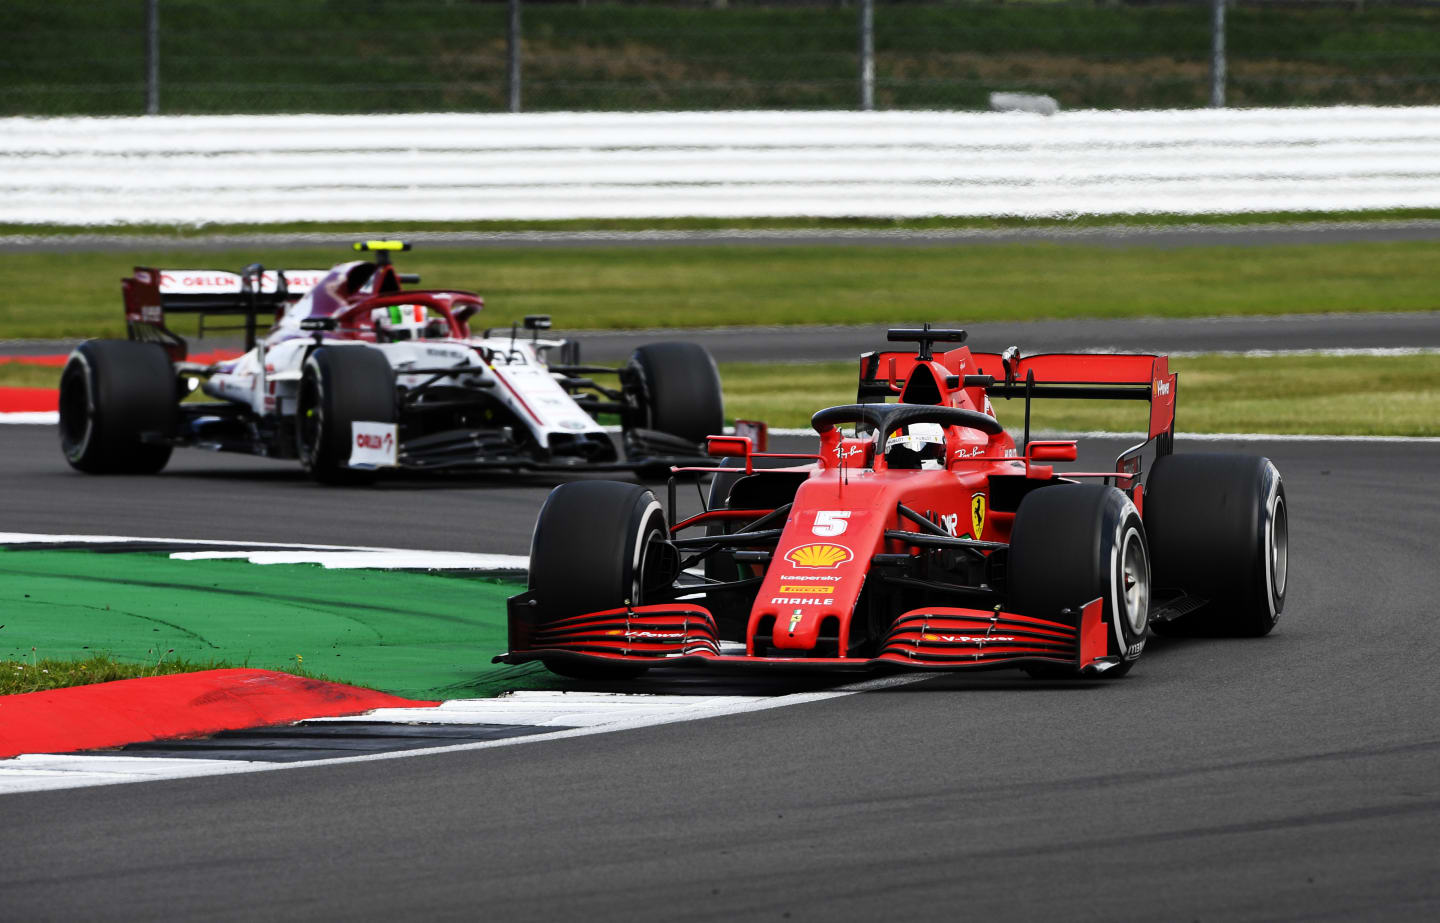 NORTHAMPTON, ENGLAND - AUGUST 02: Sebastian Vettel of Germany driving the (5) Scuderia Ferrari